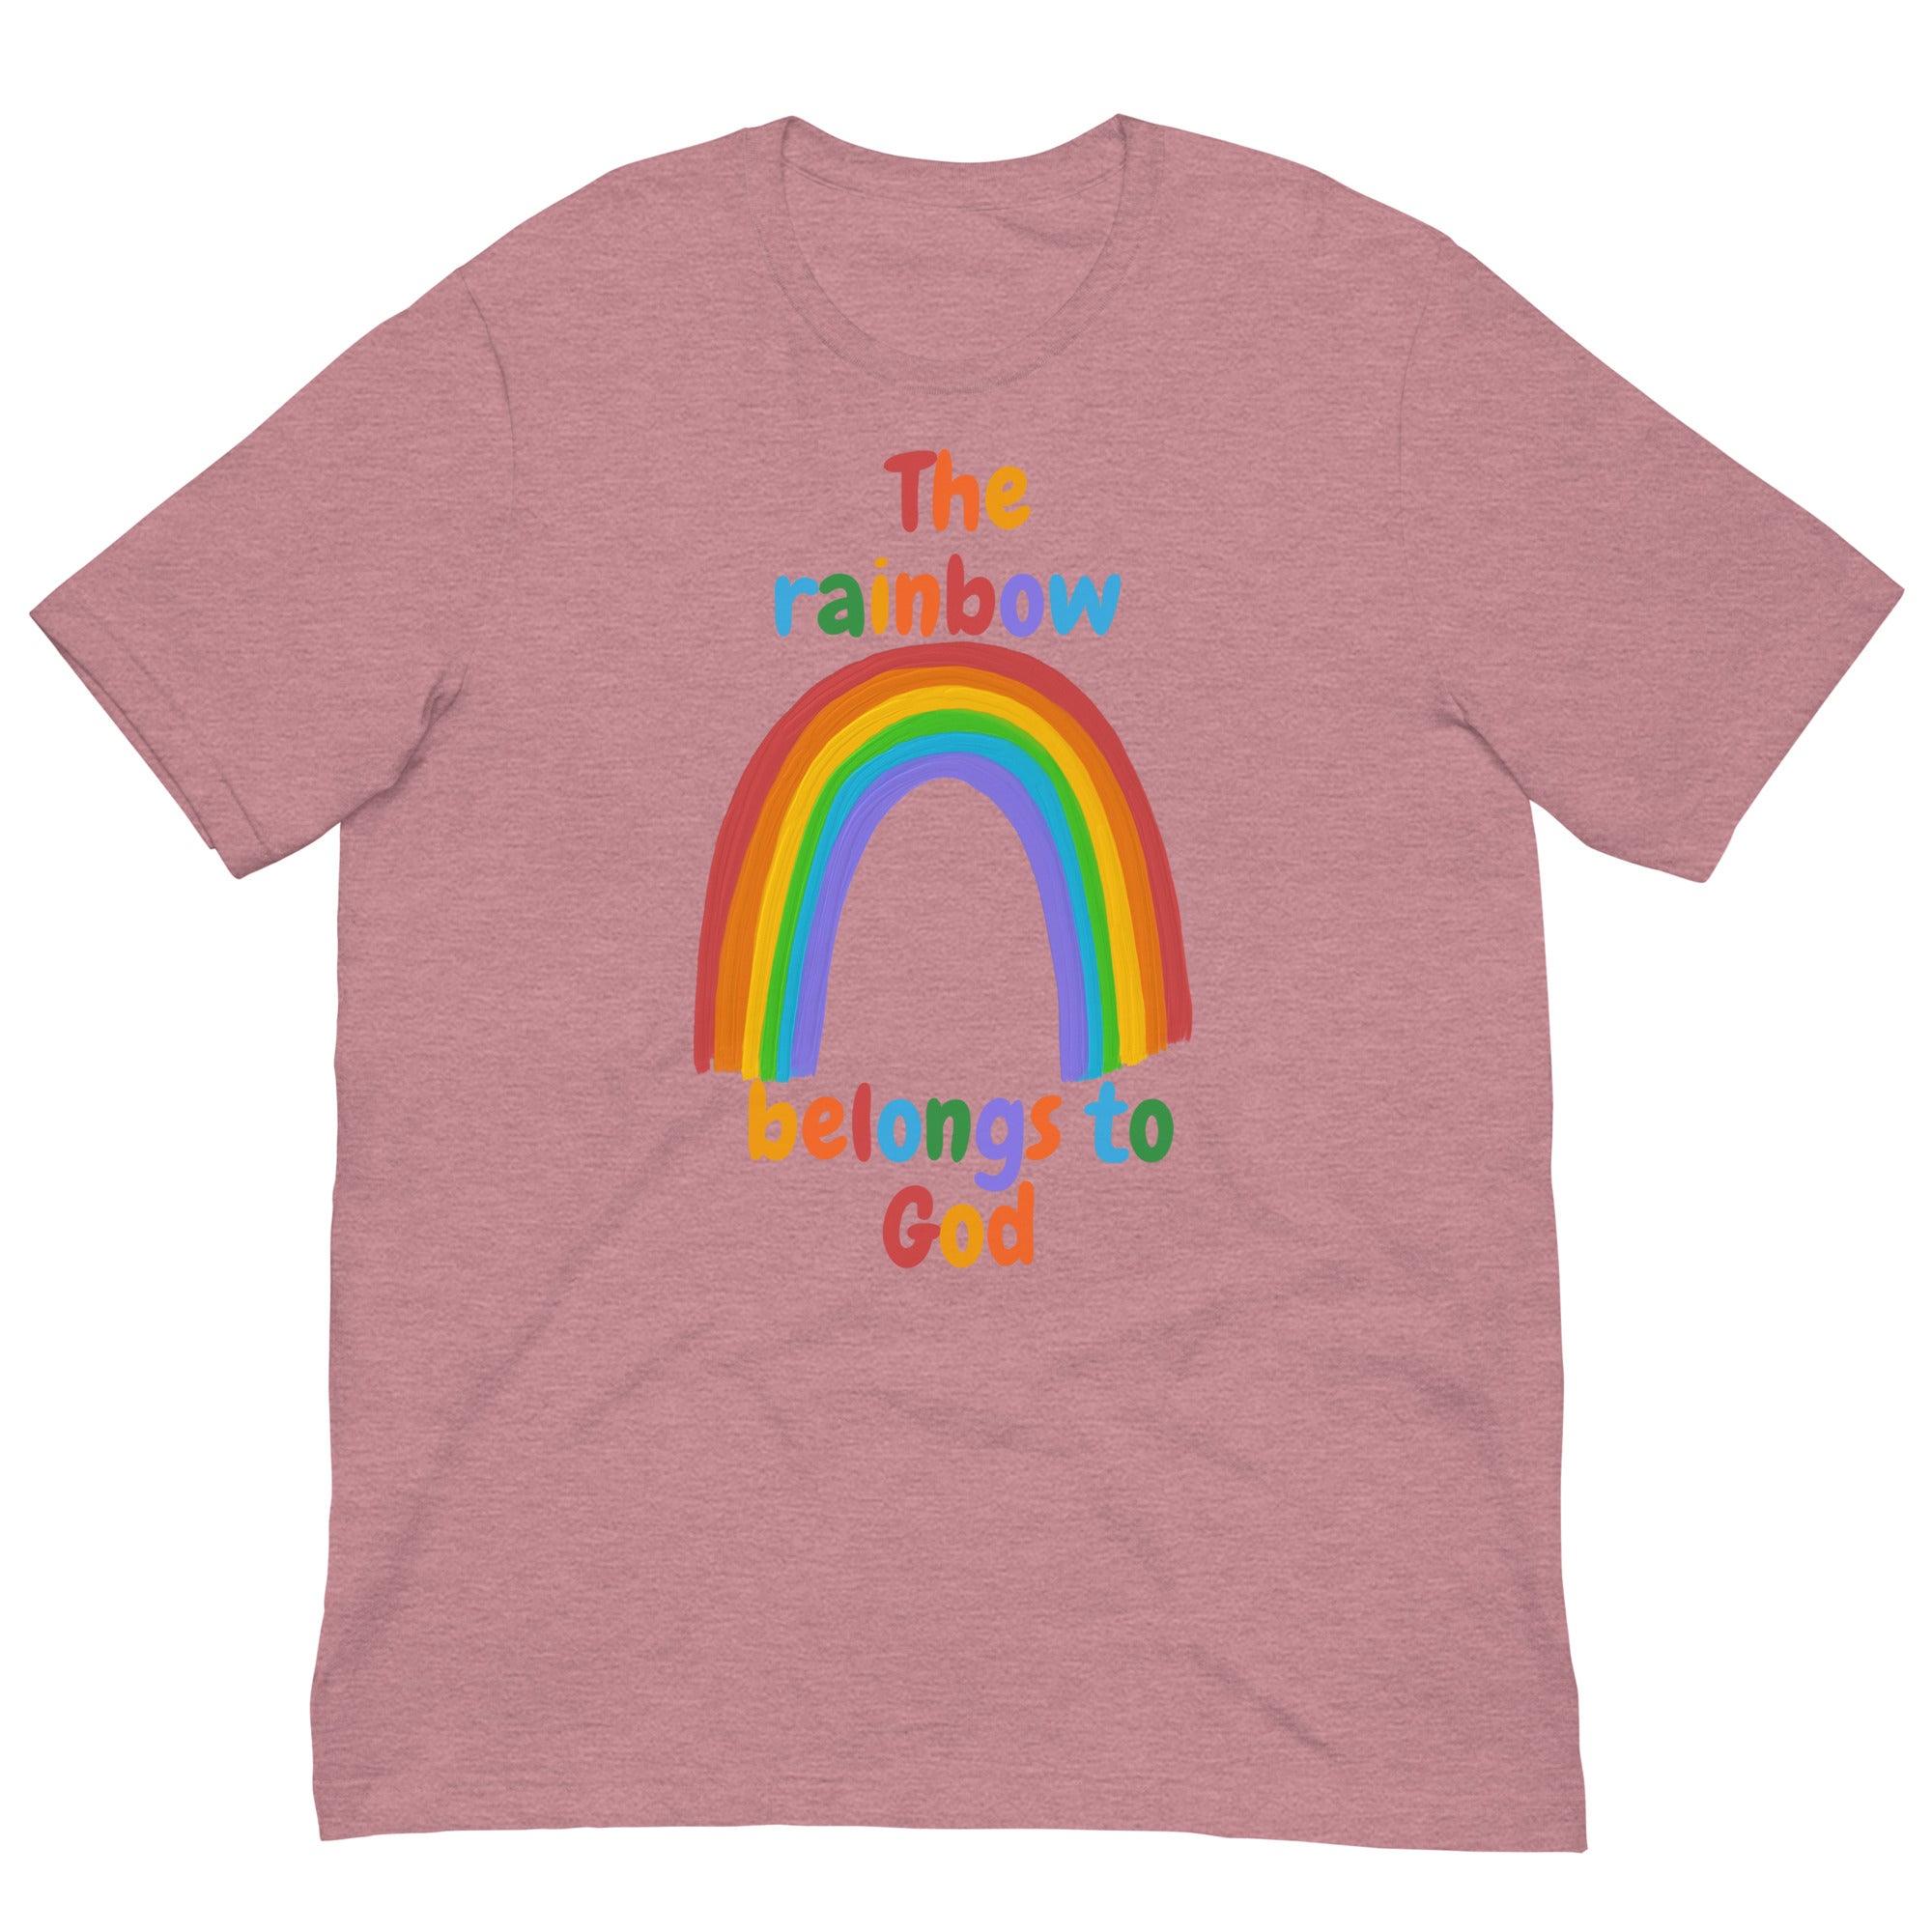 The Rainbow Belongs to God Unisex t-shirt